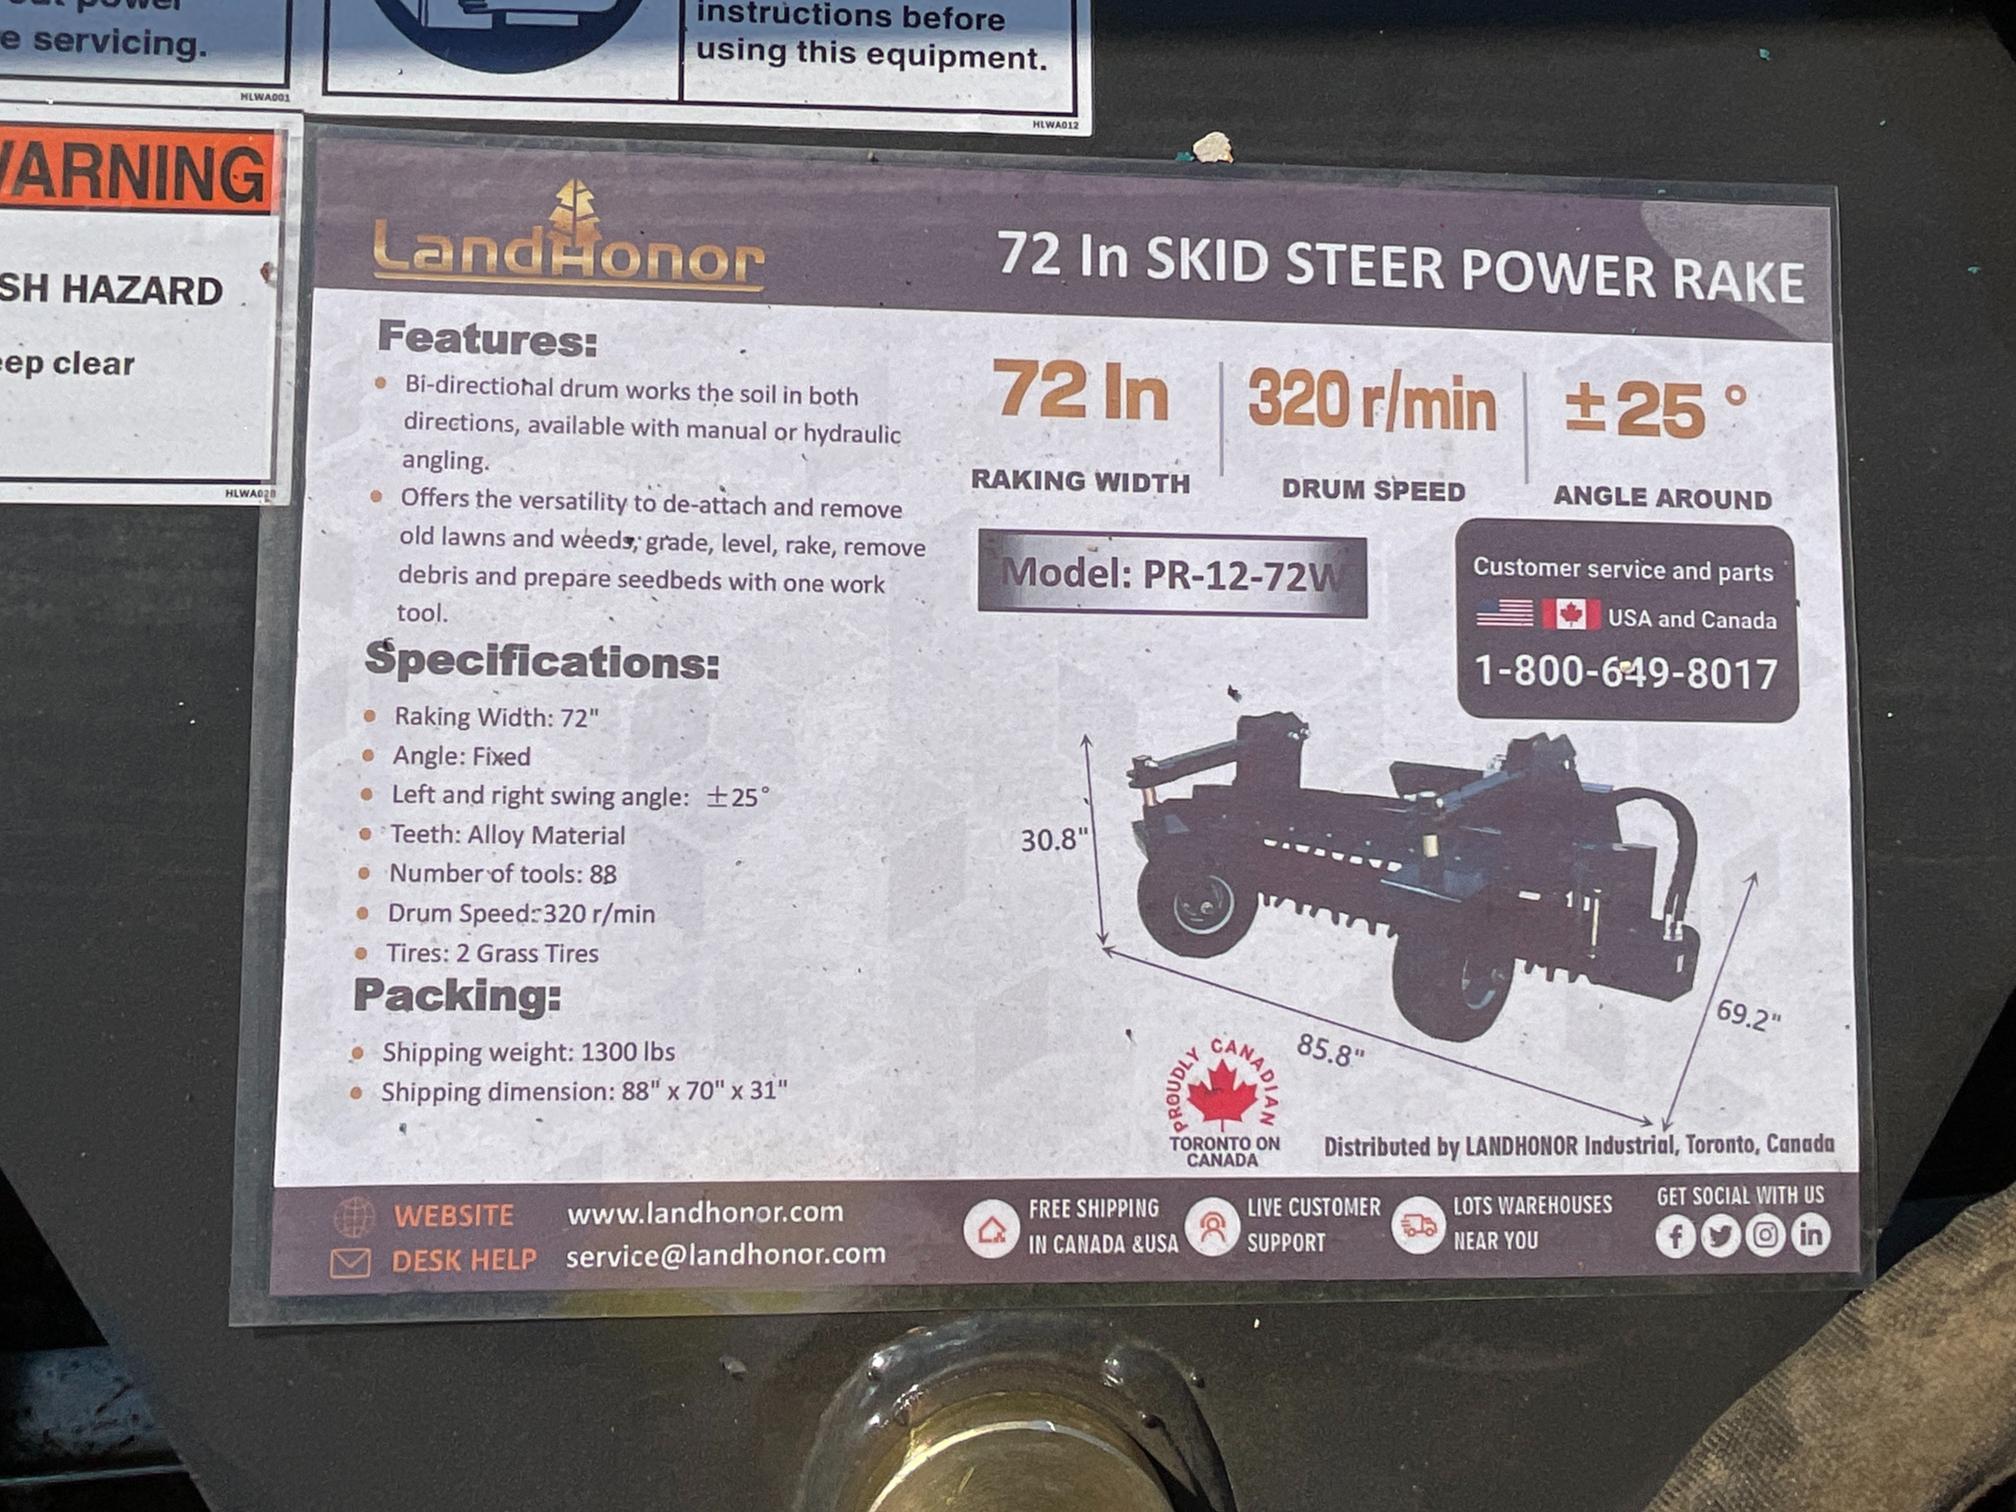 Landhonor PR-12-72W Power Rake